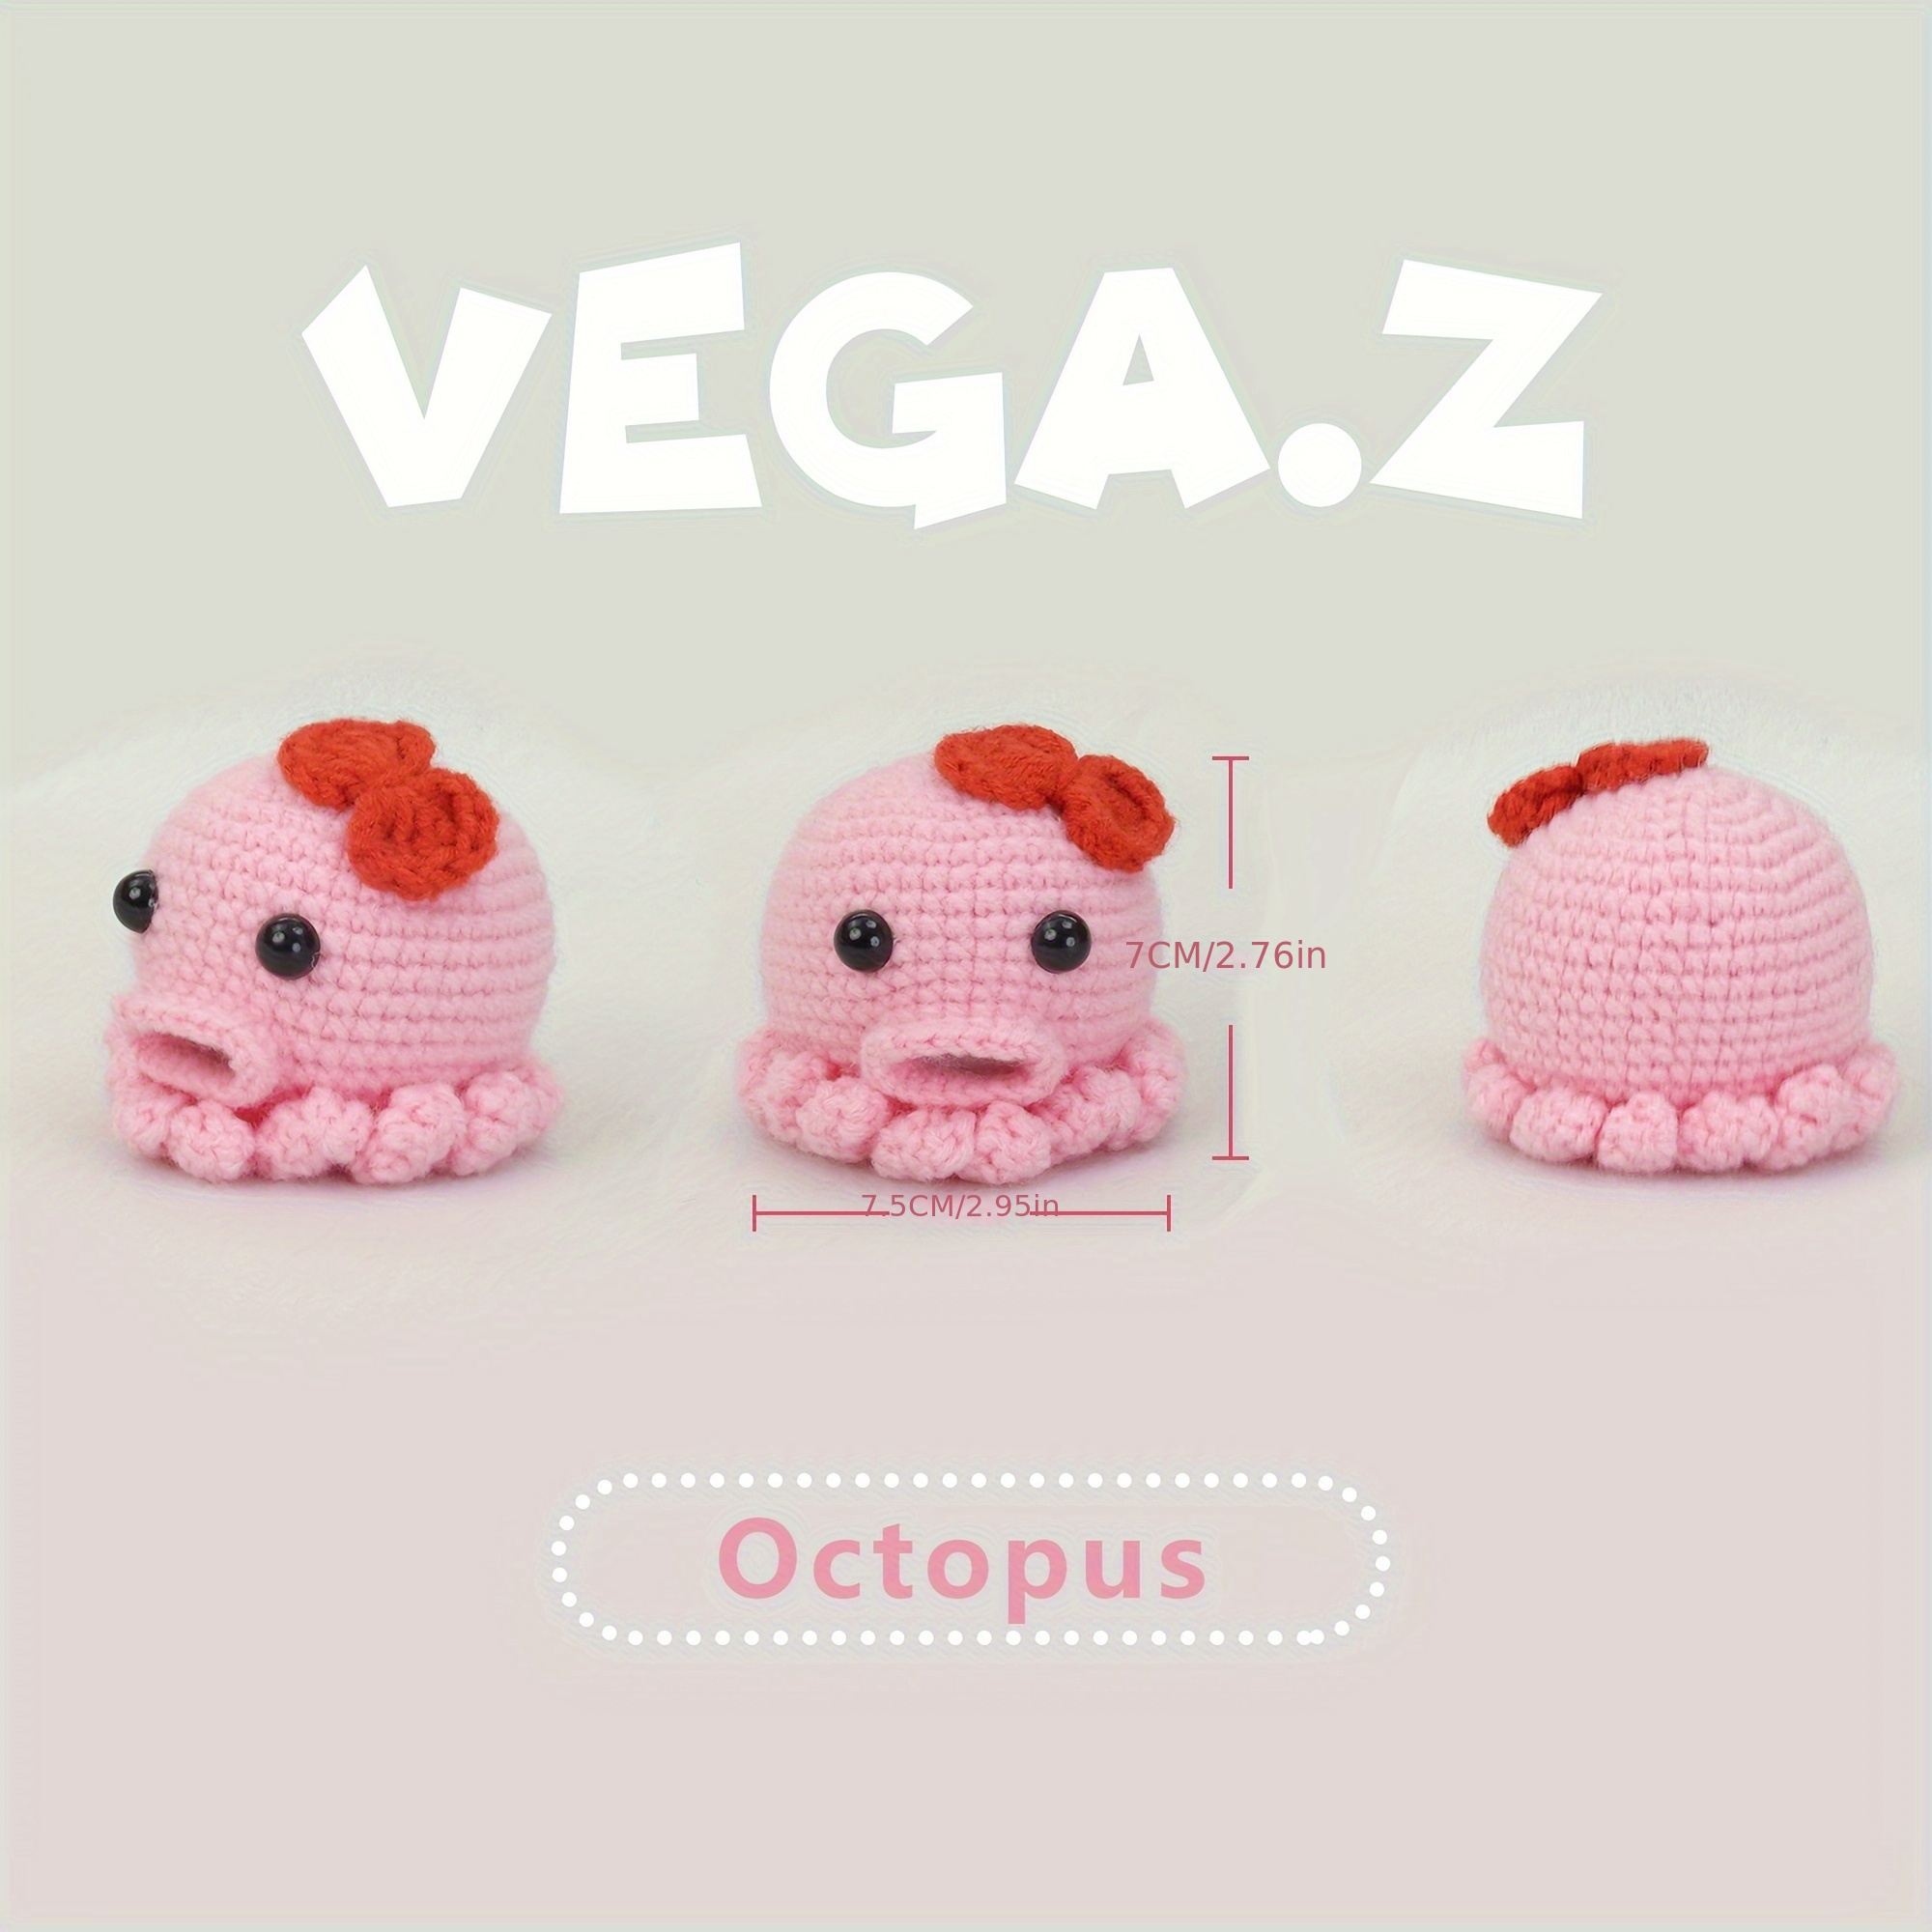 Crochet Kit for Beginners Small Octopus Crochet Knitting Kit Adorable Animal  Crochet Starter Pack with 5 Colors Thread - AliExpress